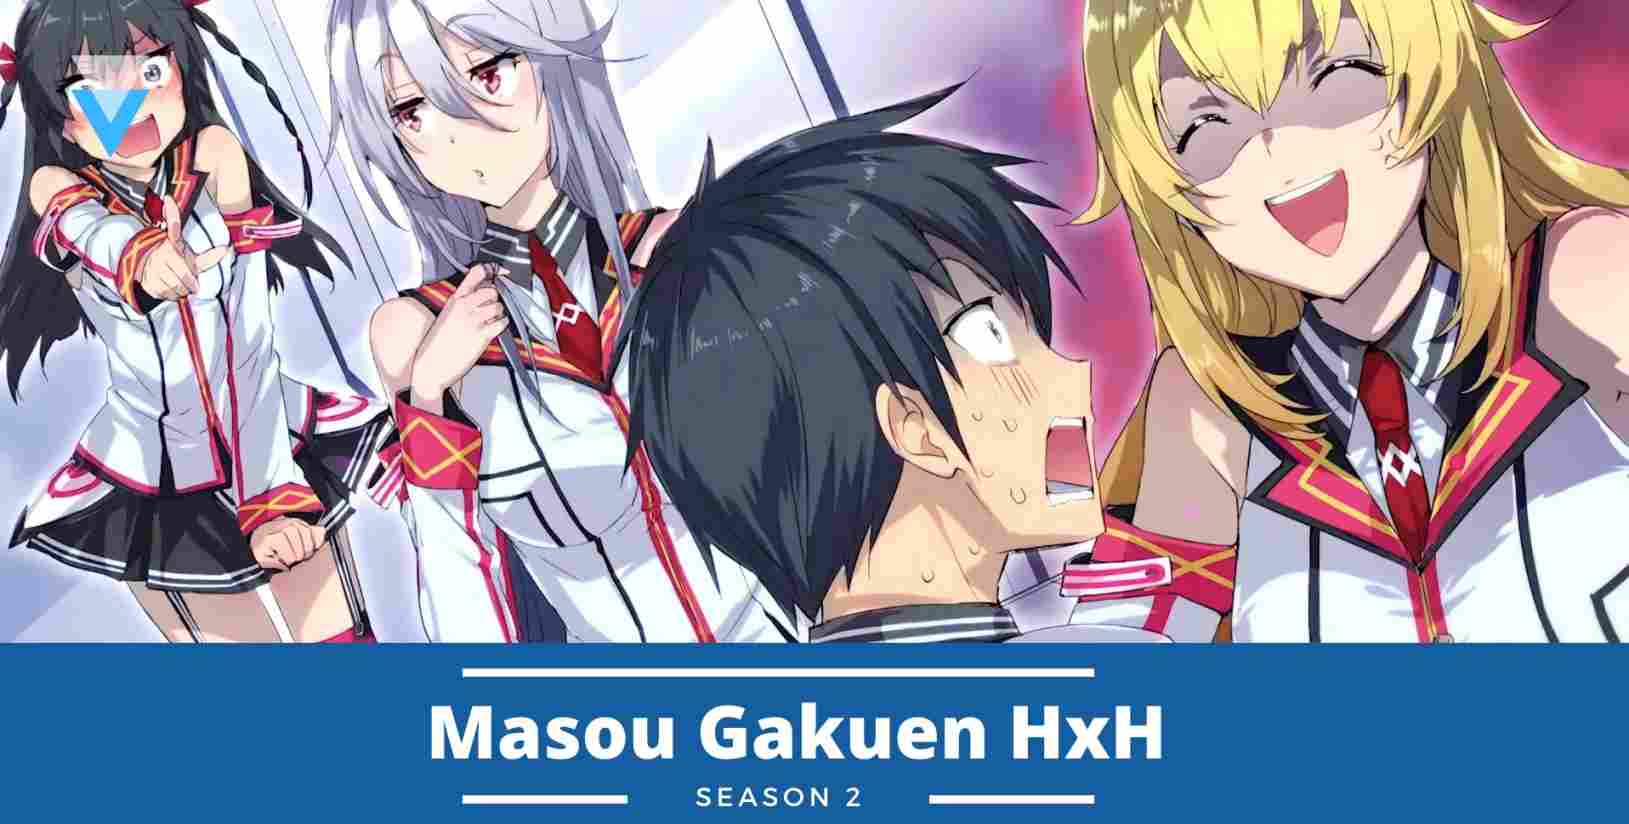 Masou Gakuen HxH Season 2